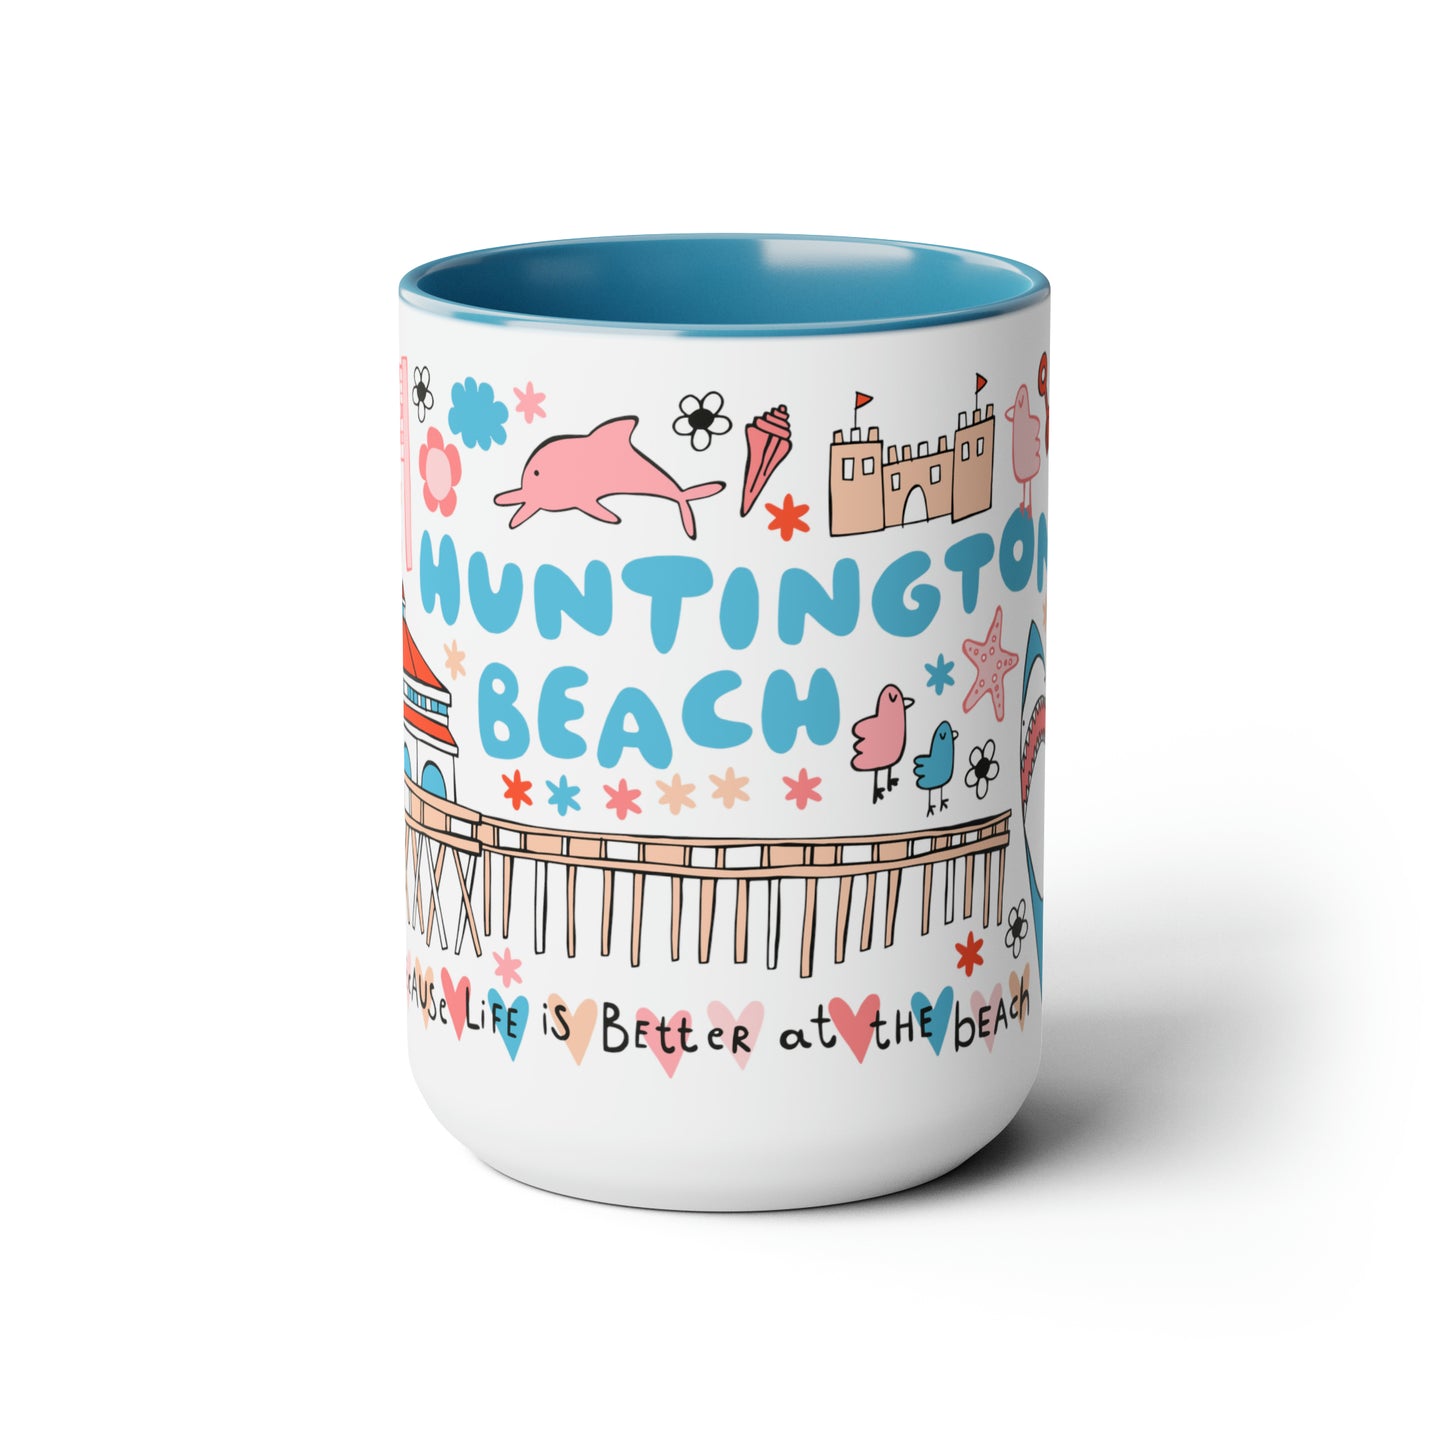 Huntington Beach - *BIG* Coffee Mug (15oz, blue)